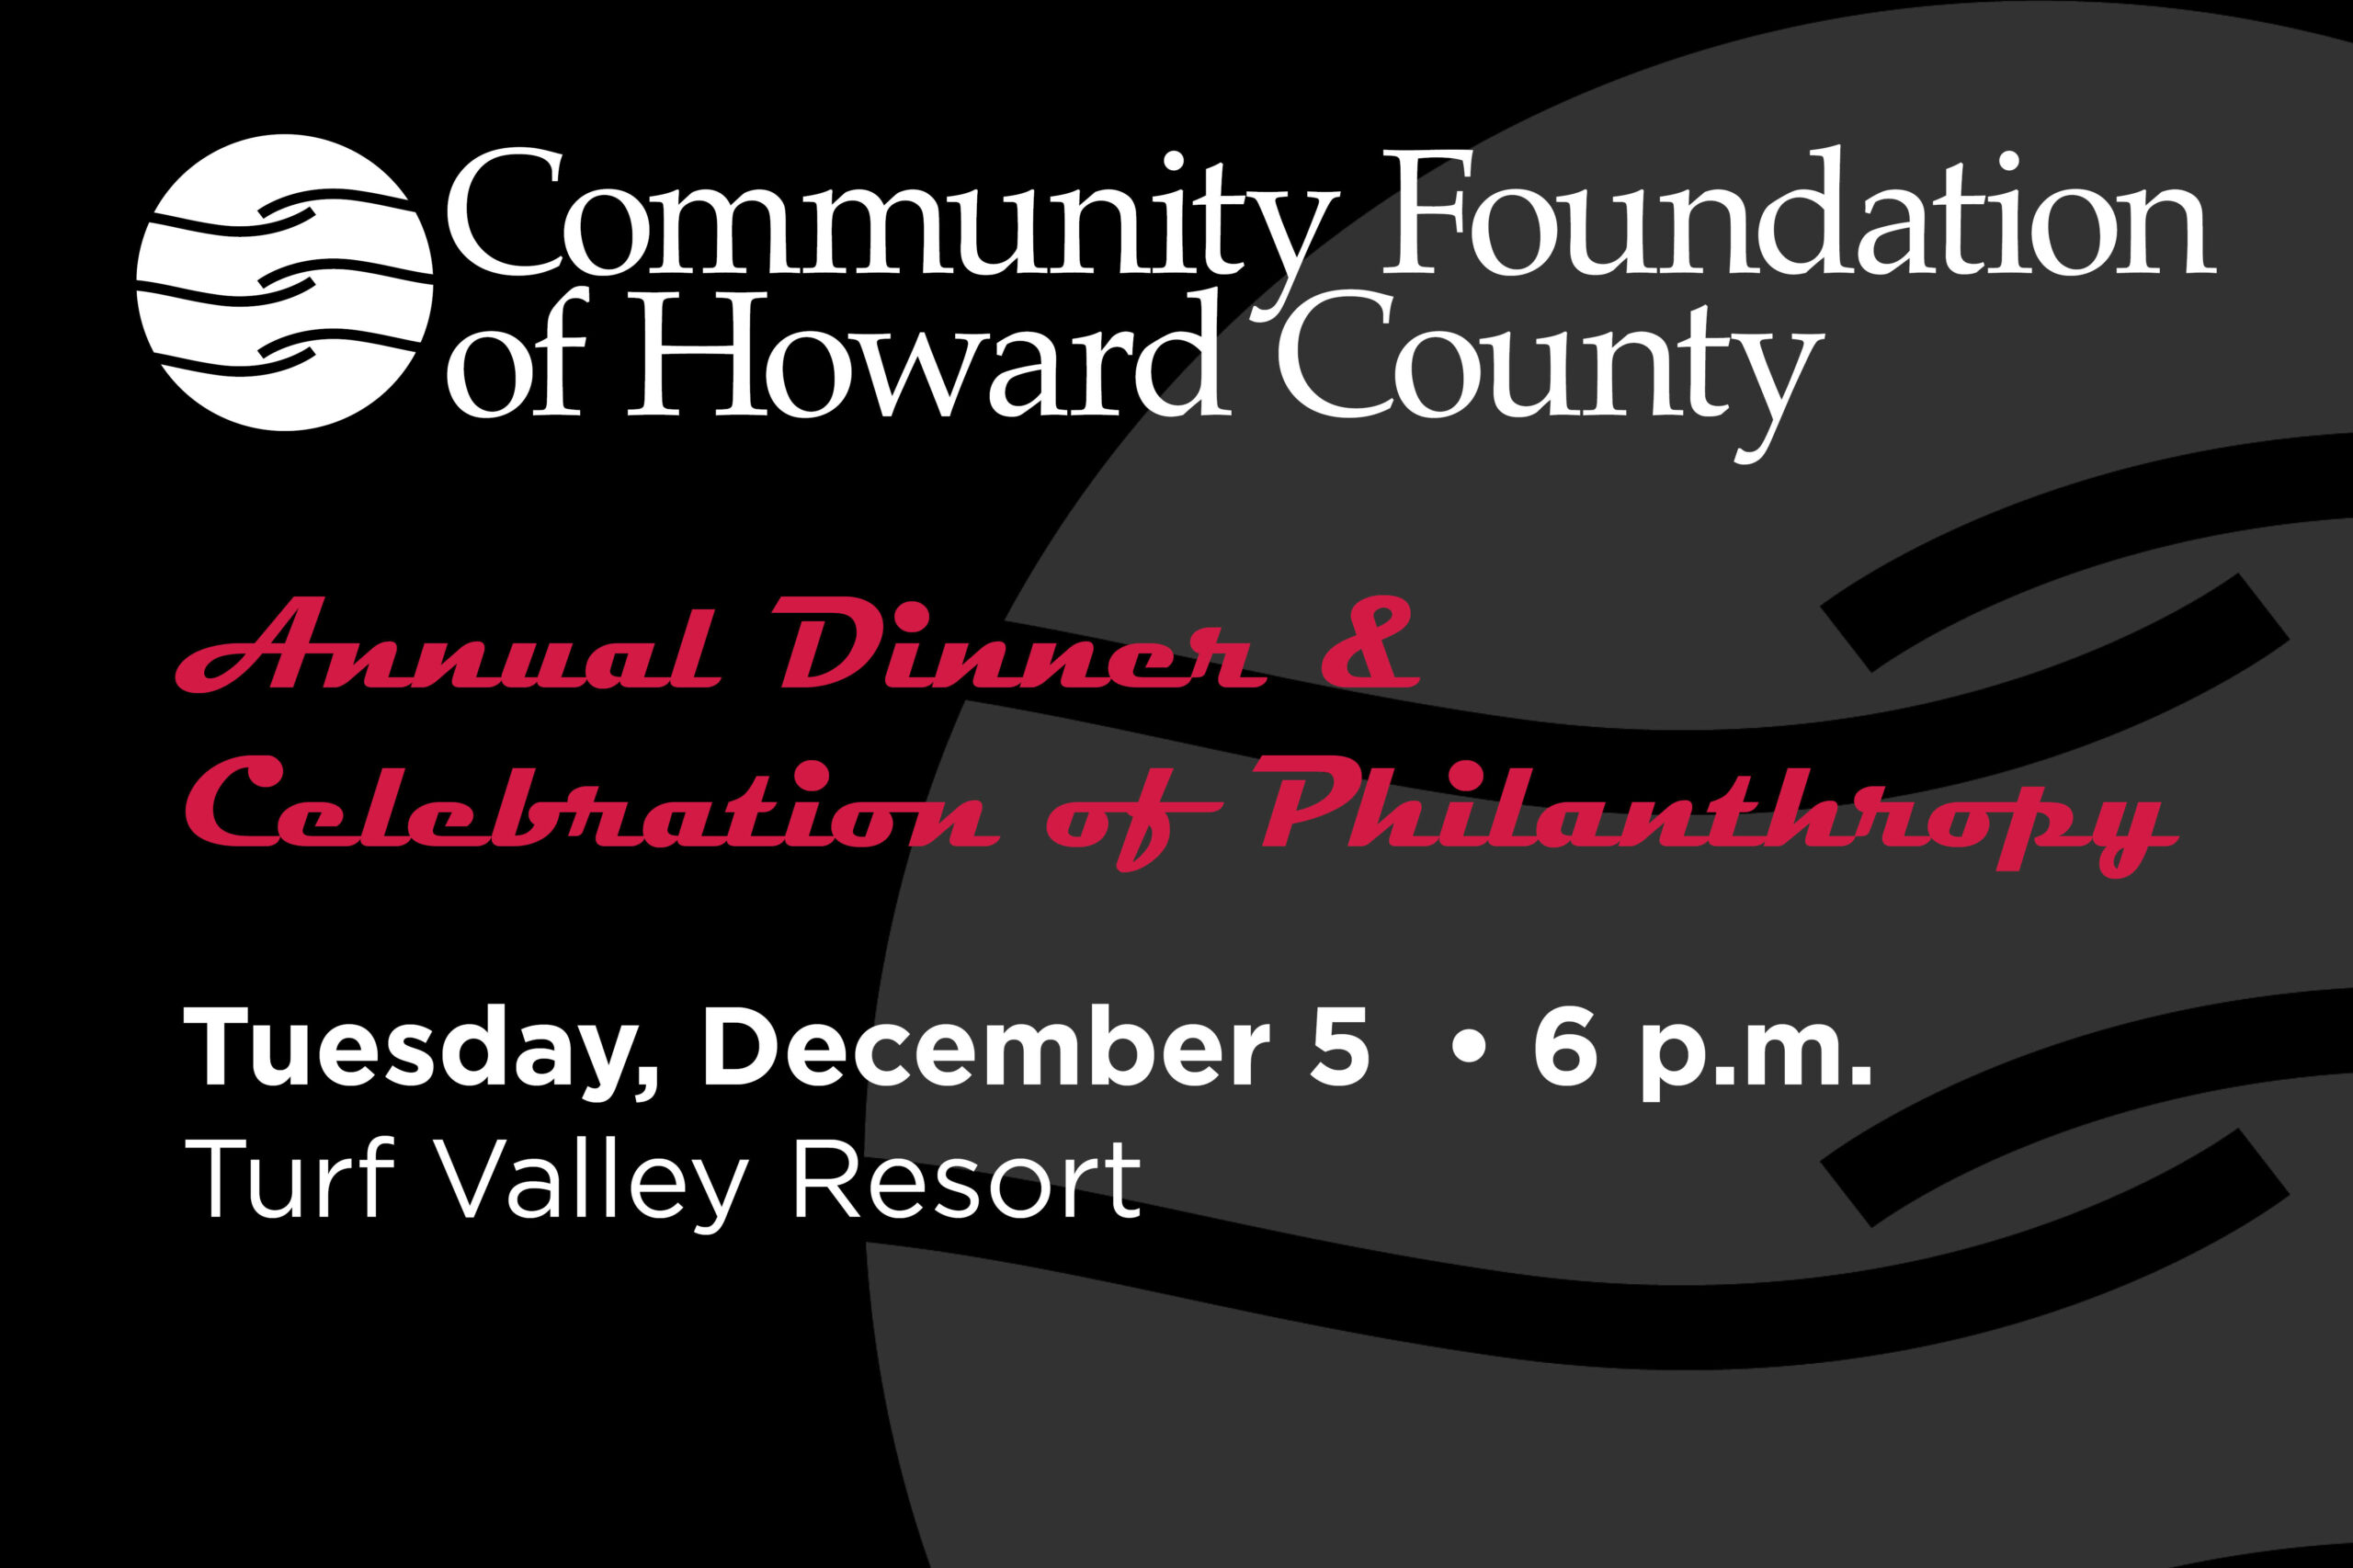 Annual Dinner & Celebration of Philanthropy Set for December 10